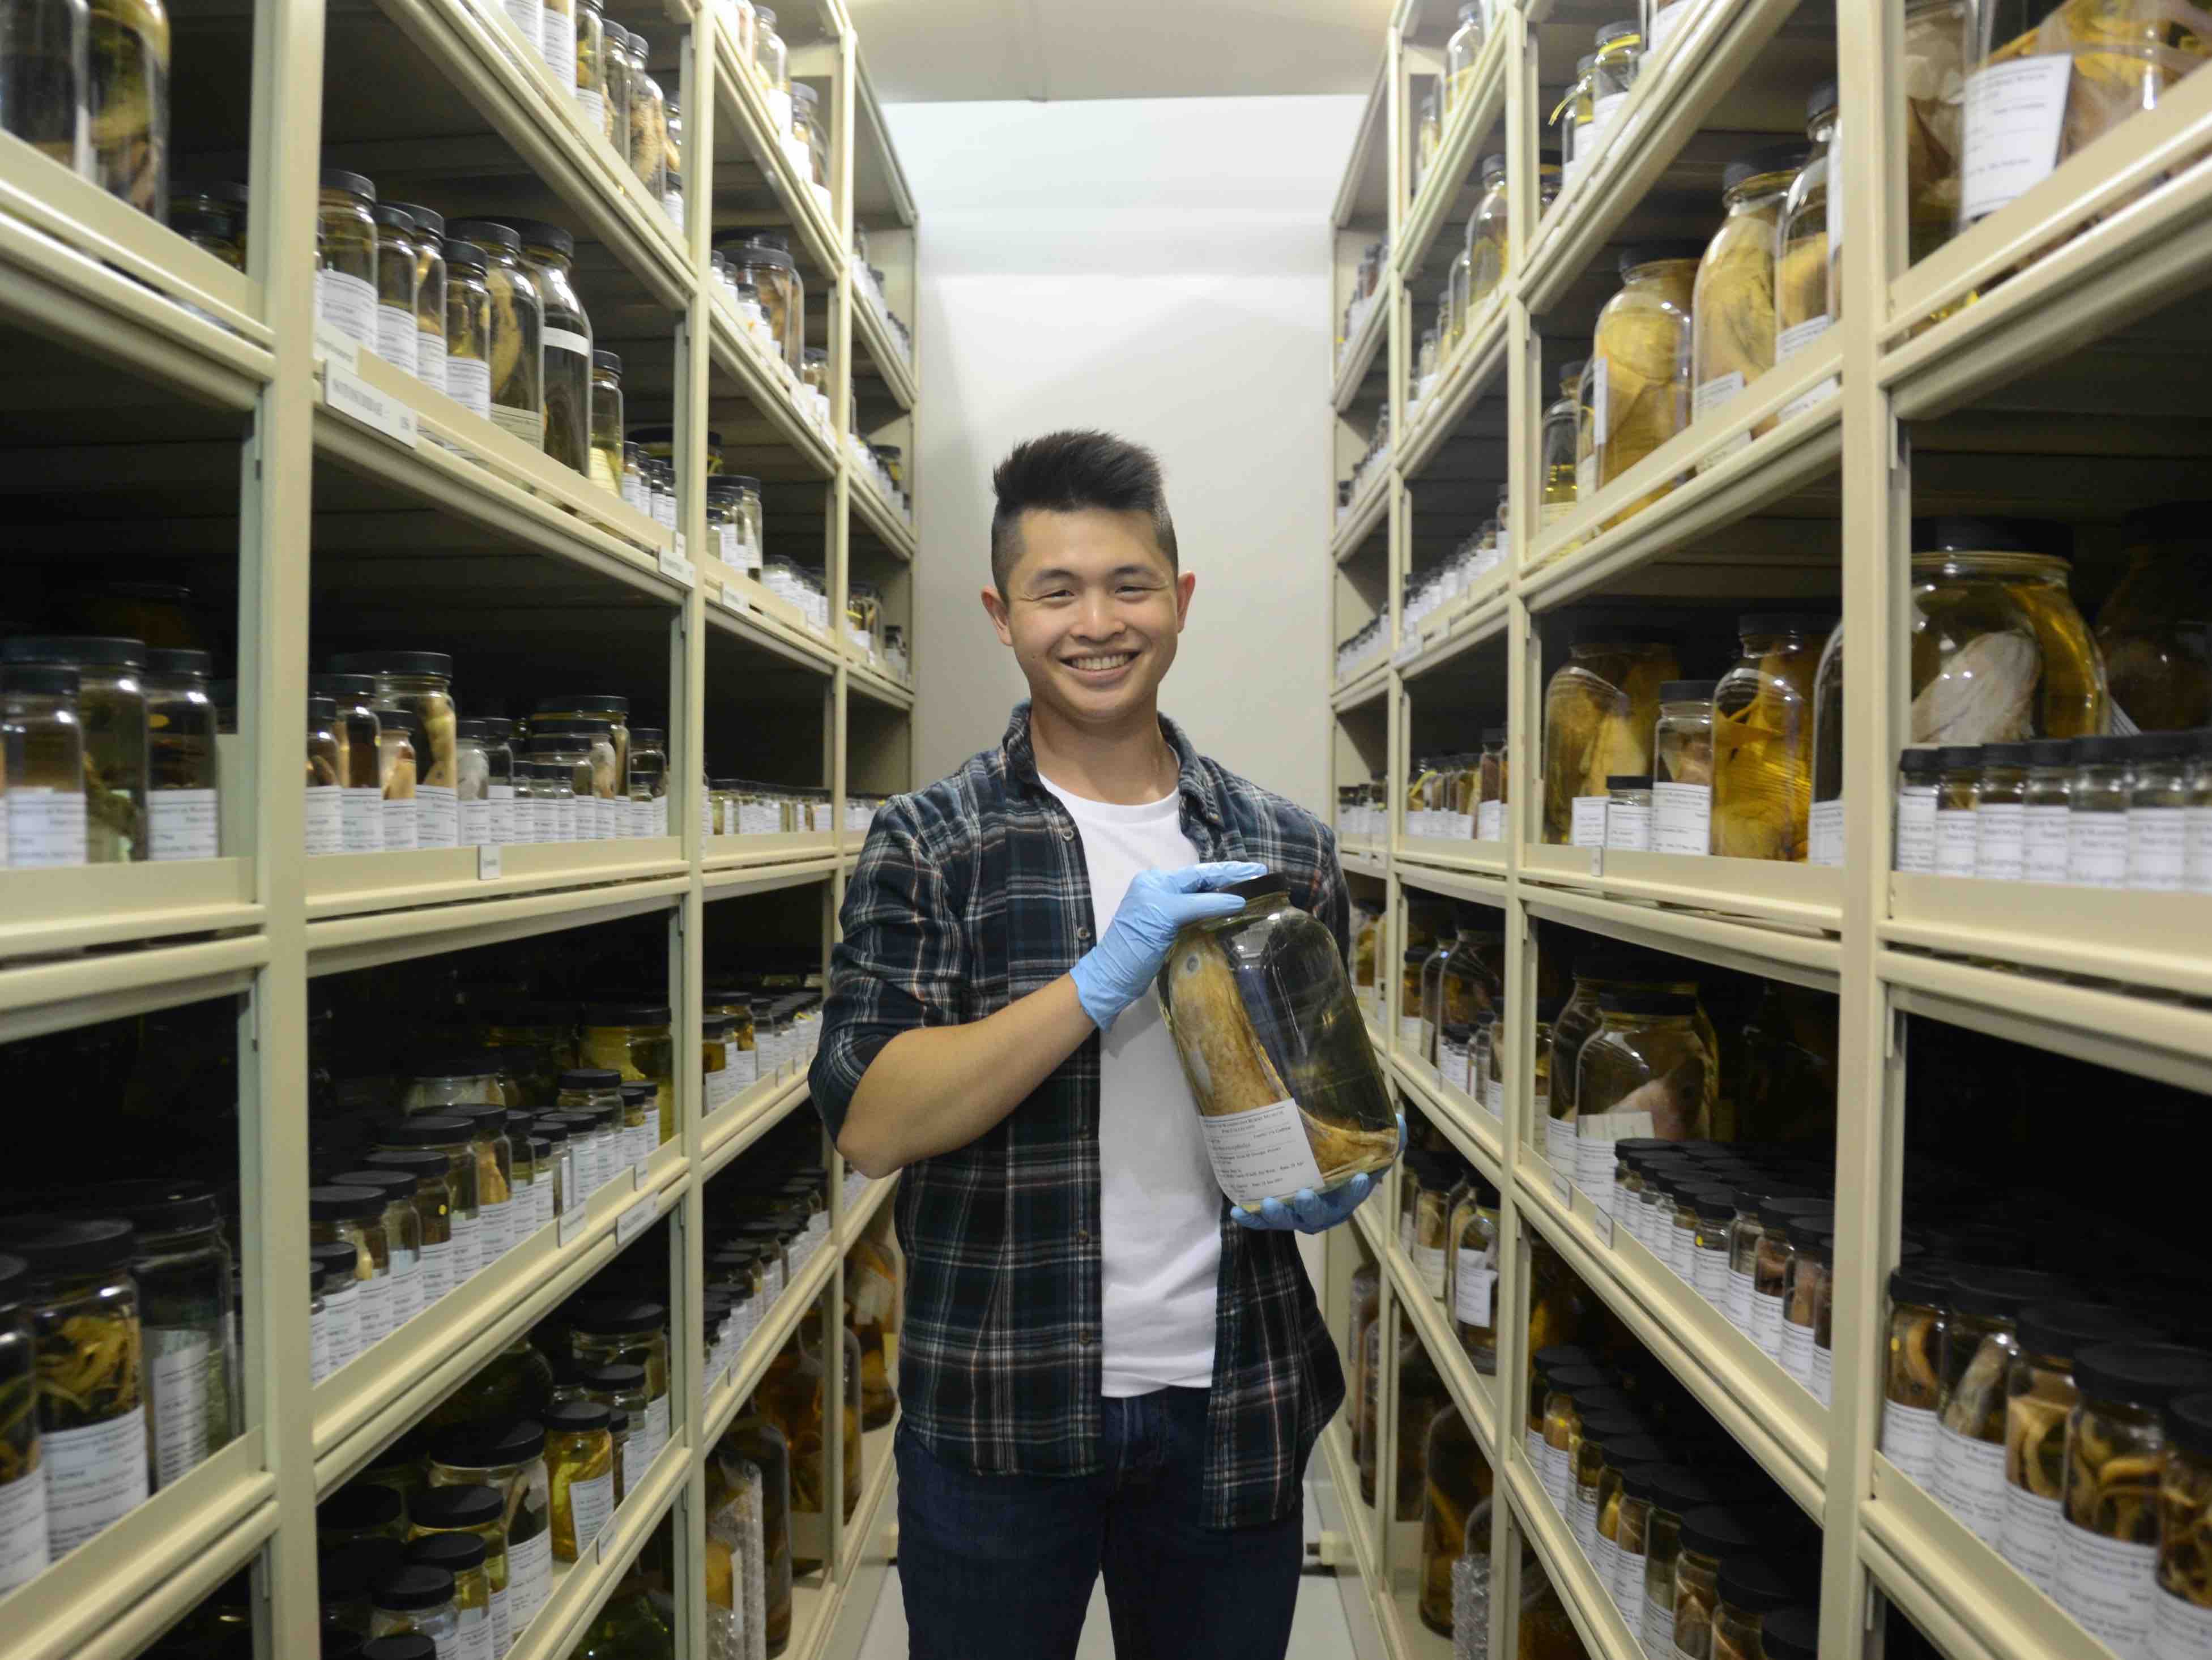 Jonathan in the University of Washington Fish Collection